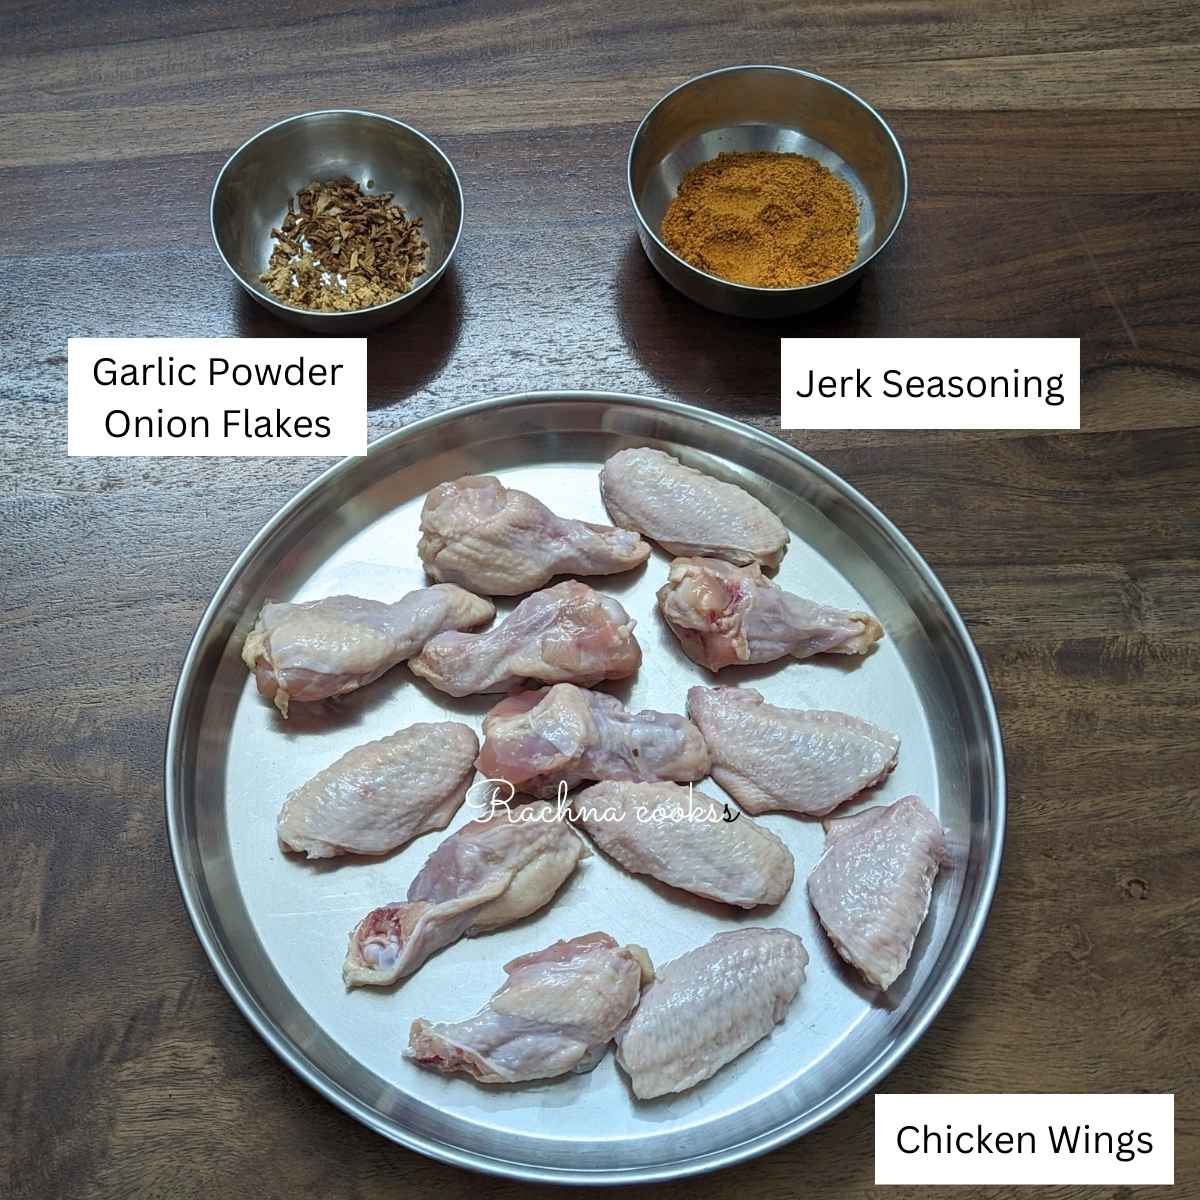 Ingredients for making jerk chicken wings